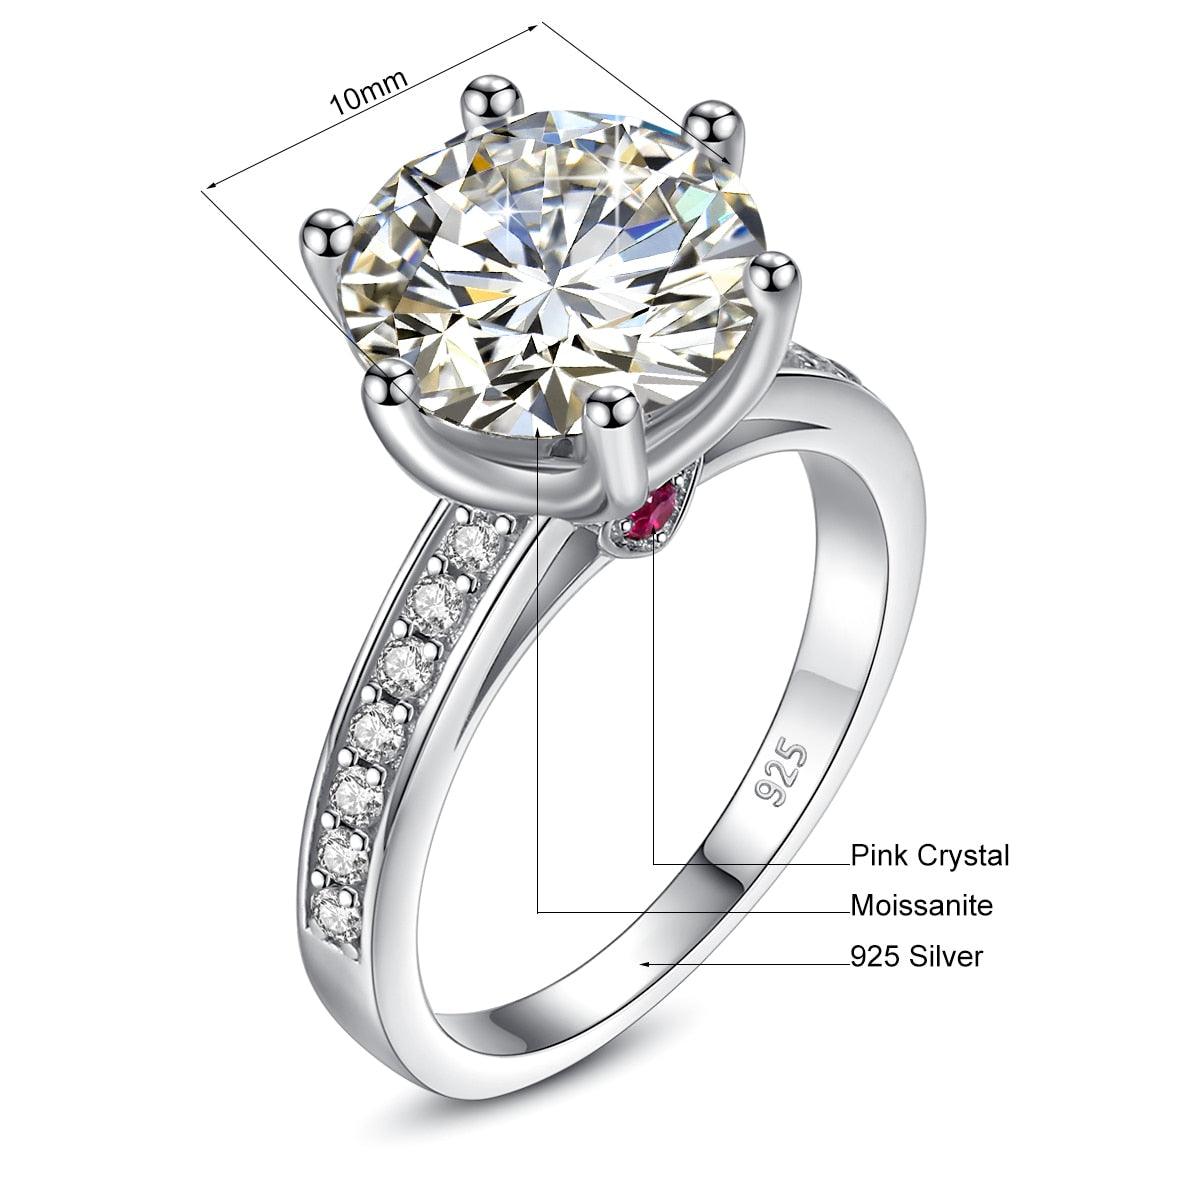 Stunning Halo Round Cut 4 Carat High Quality Moissanite Diamonds Ring - Wedding Engaagement Jewellery - The Jewellery Supermarket